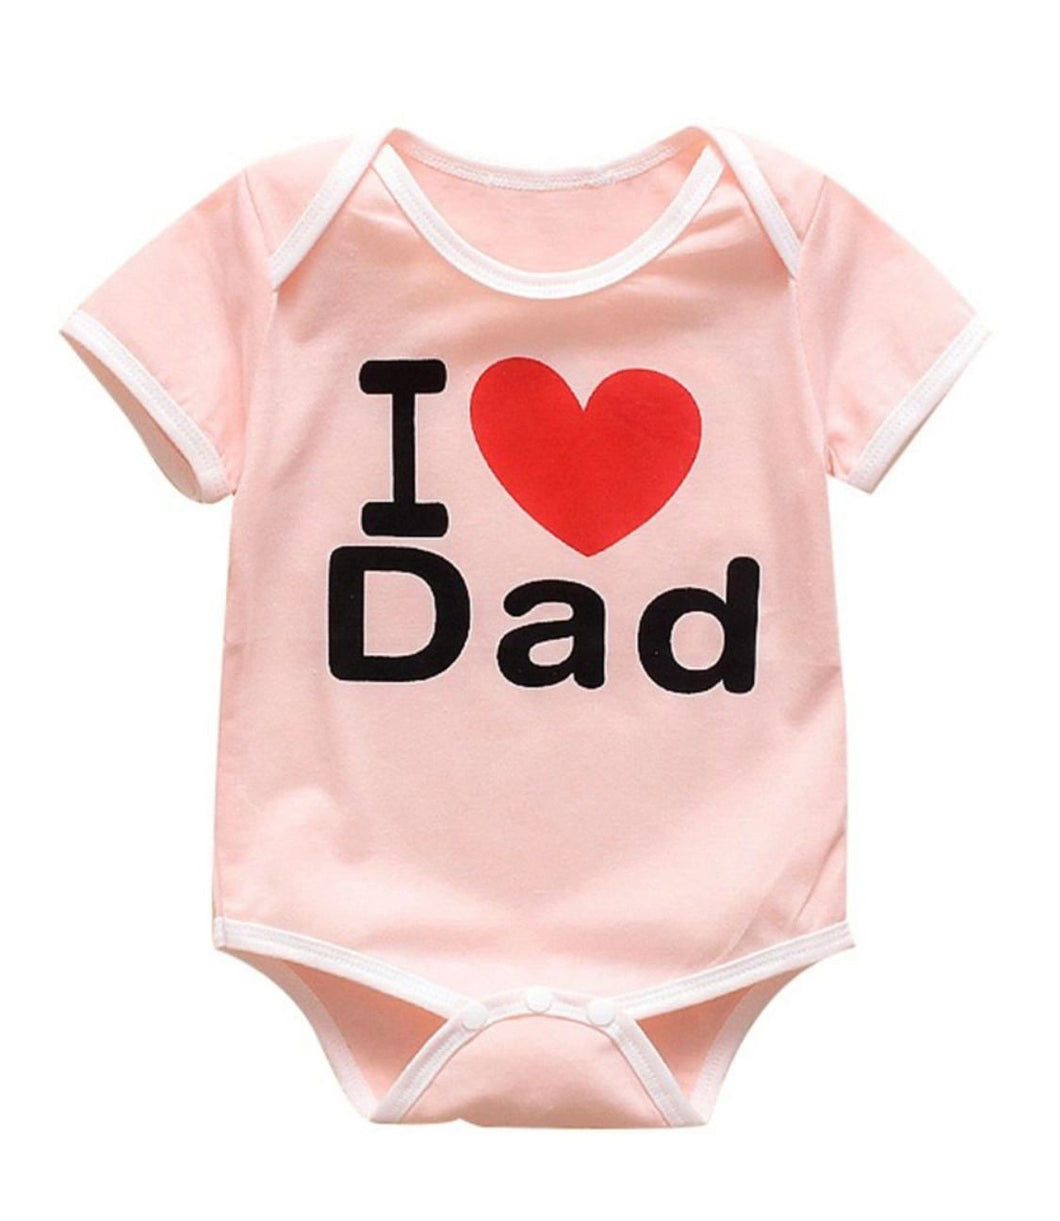 Pink “I love dad” romper